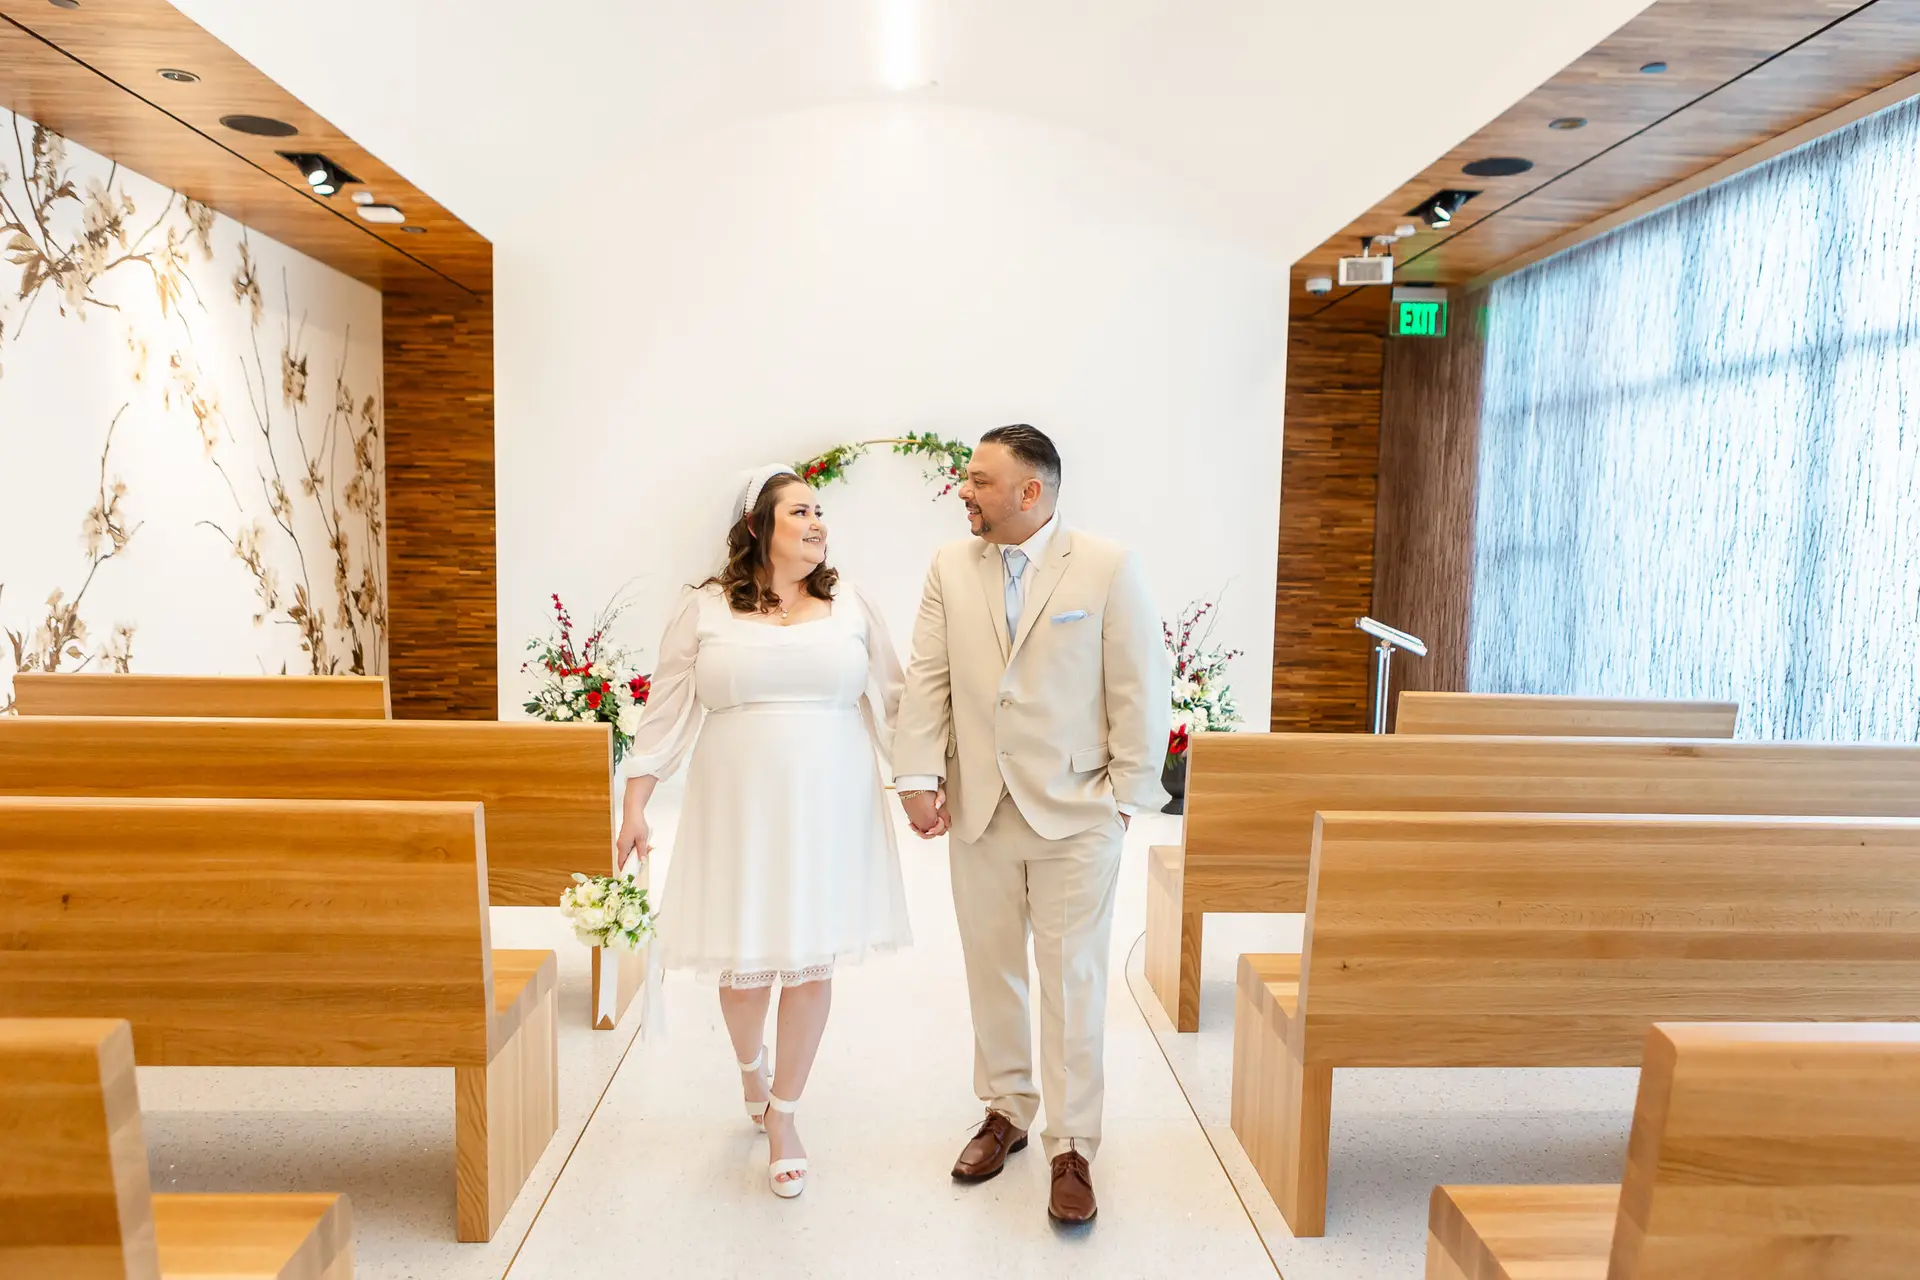 Deanna and Fabian's Modern Courthouse Wedding at Santa Clara County New Chapel